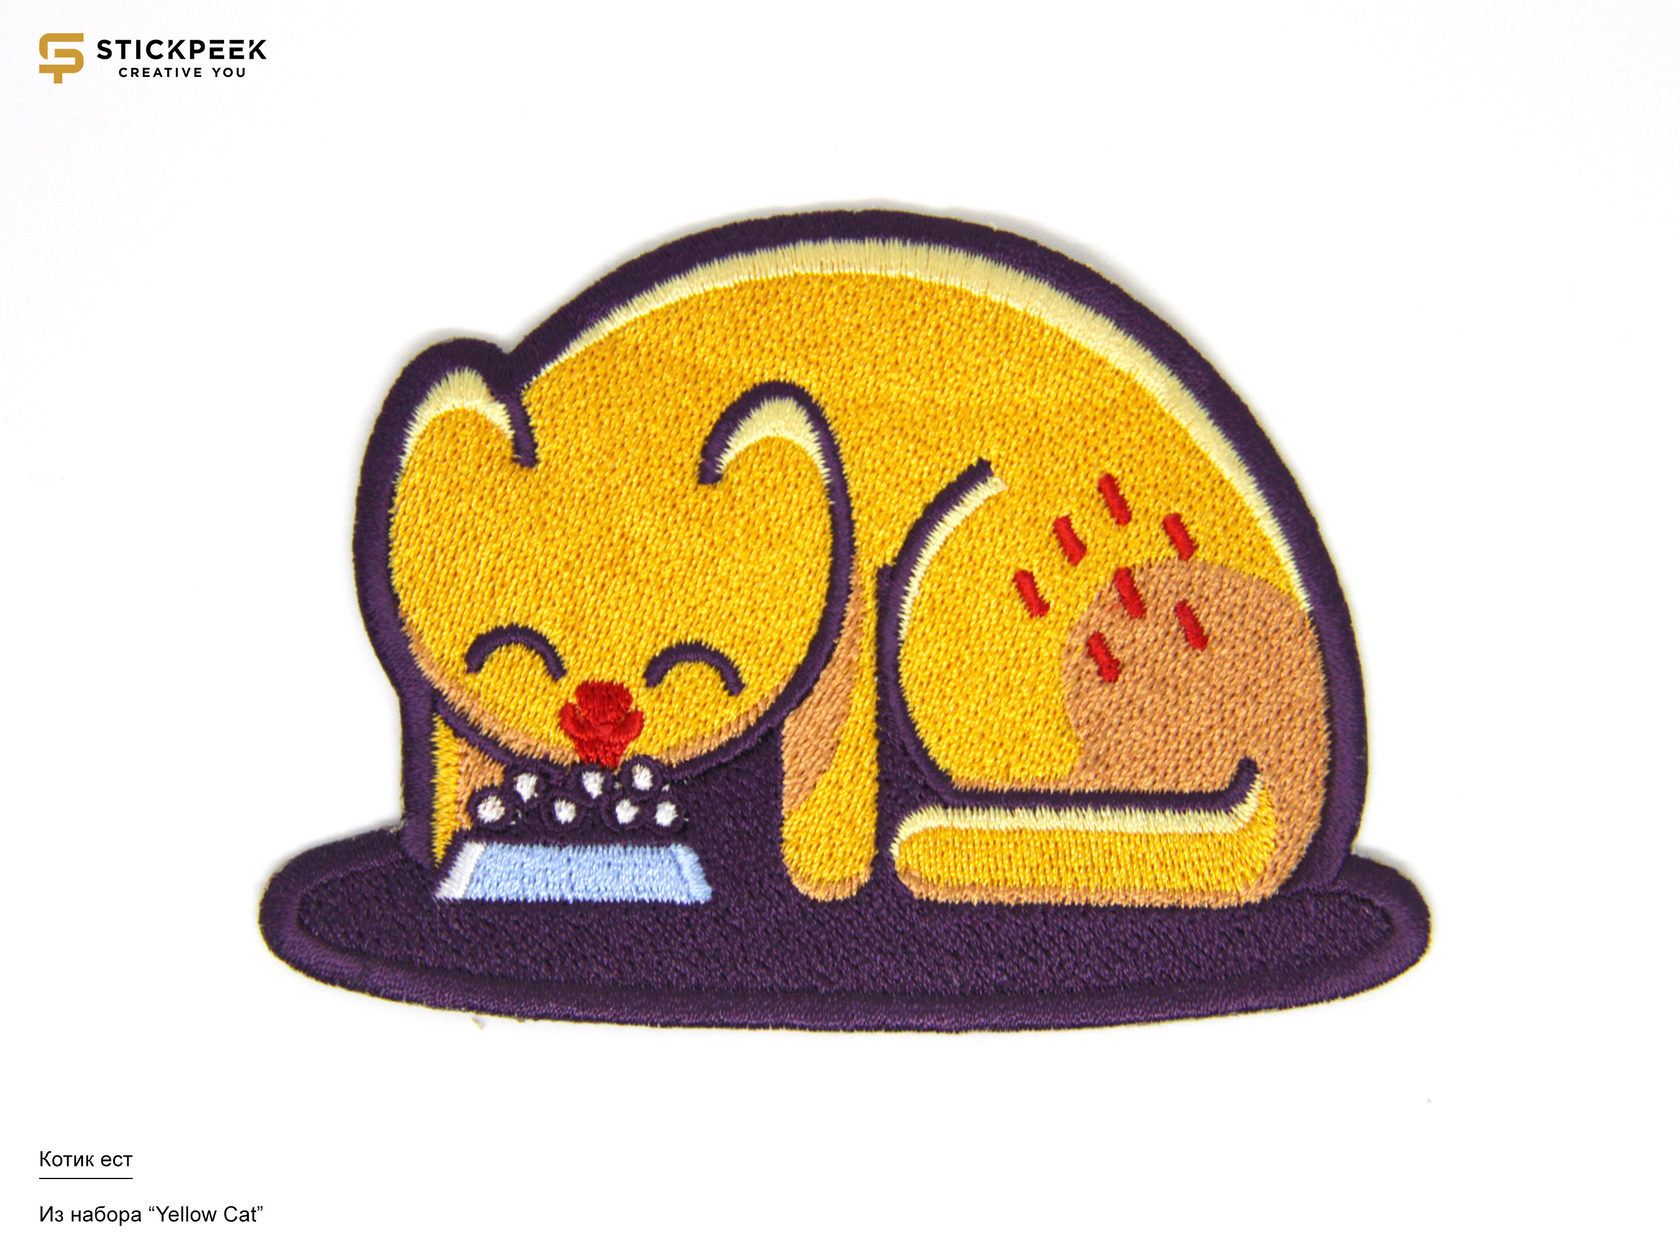 Игры желтый кот. Вышивальные Стикеры. Желтый кот 1с. Стикеры с желтым котиком. Желтый котенок из пористой резины.